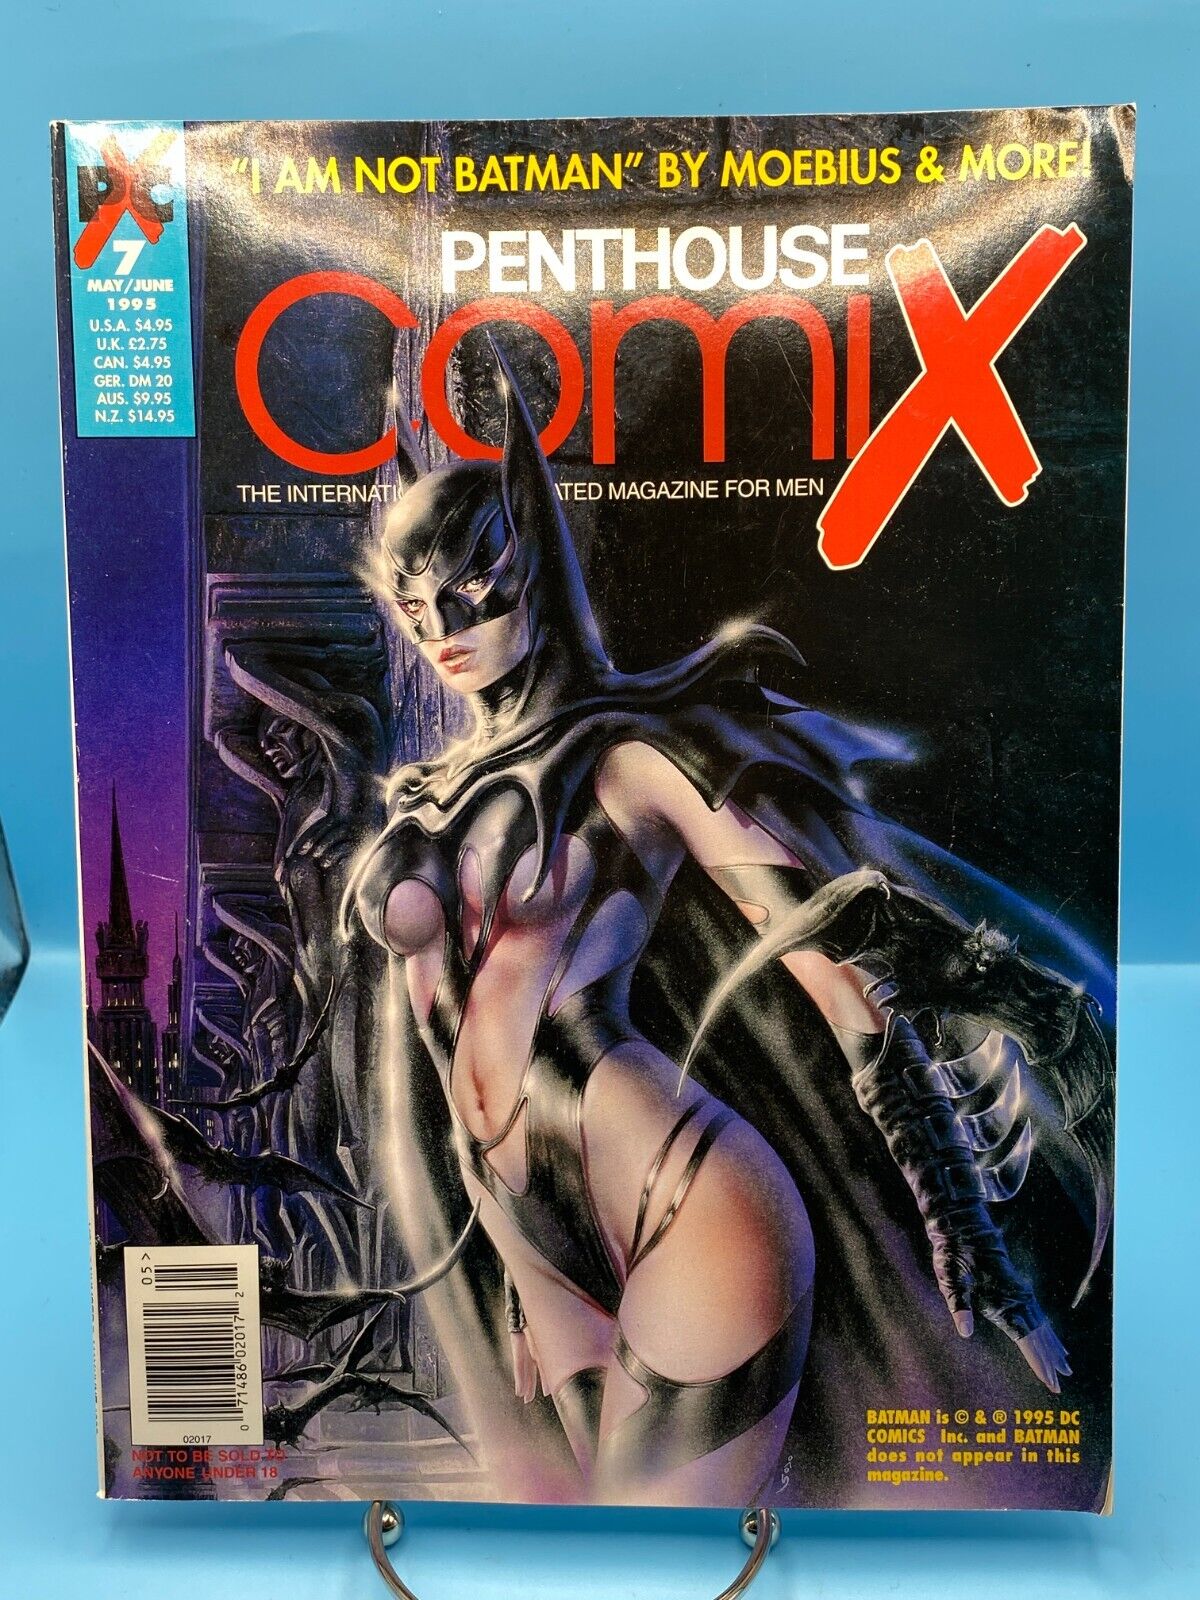 Penthouse Comix Magazine Vol. 1 issue #7 May/June 1995 Batman Moebius Cover